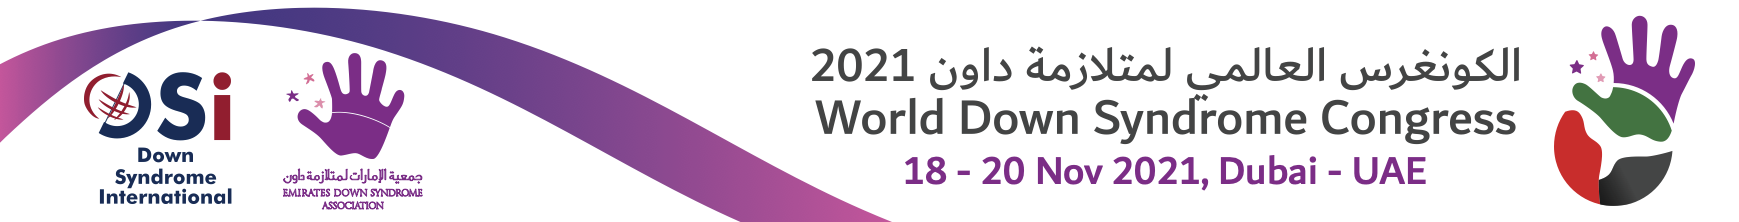 Banner WDSD 2021 Dubai